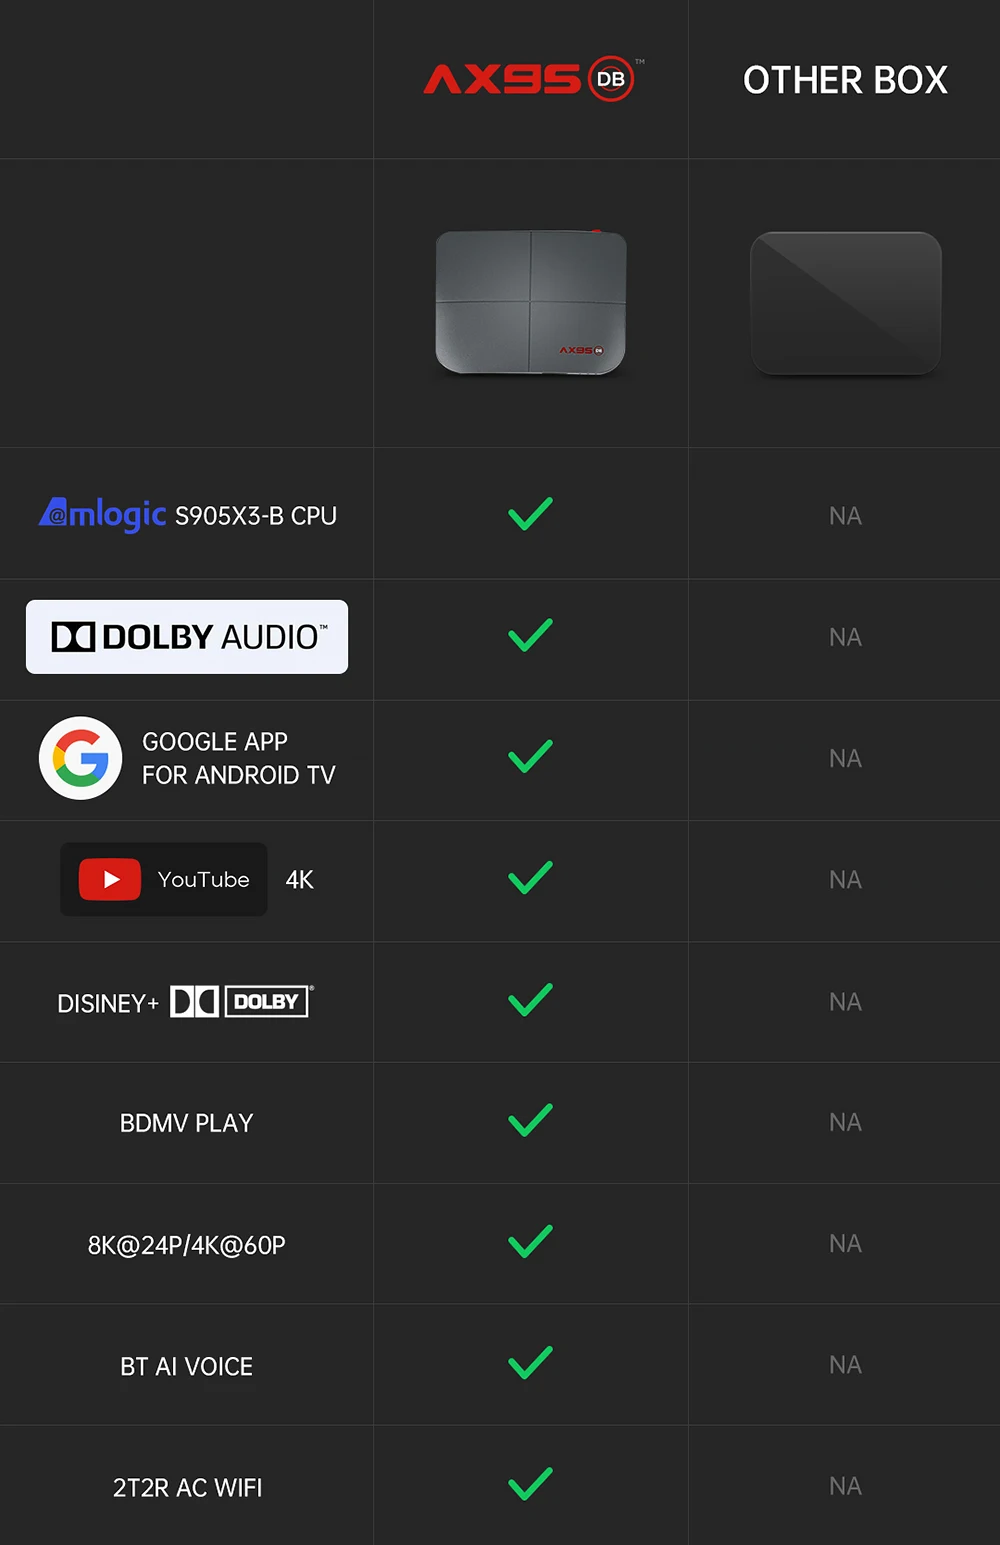 New Goolge Chromecast Google Tv Ax95db Amlogic S905x3-b Android 9.0 Bdmv Dual Ir Receiver Latest Android Tv Box - Buy Amlogic S905x3-b Chipset Smart Tv Box Blueray Bd-iso Supporting